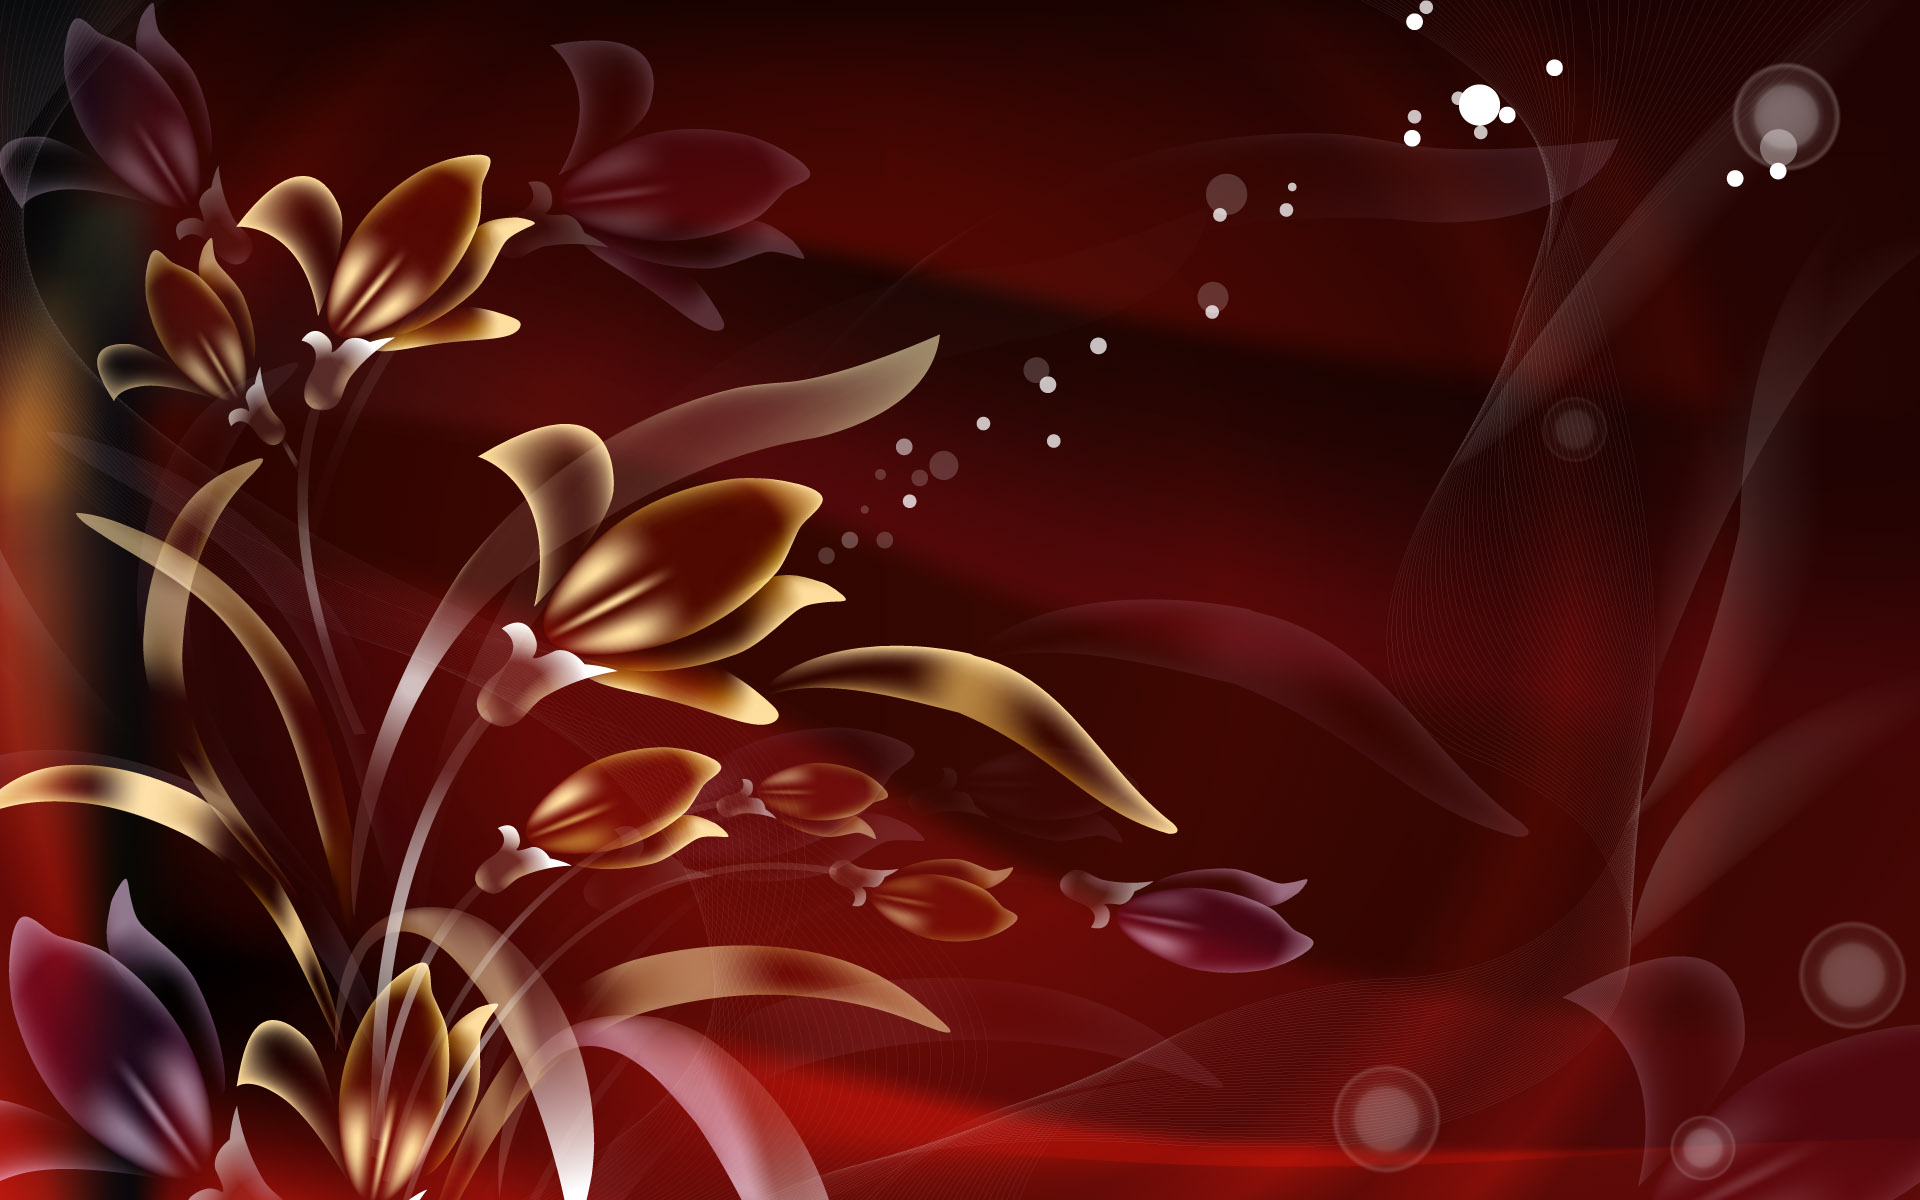 Red Flower Background wallpaper - 832133